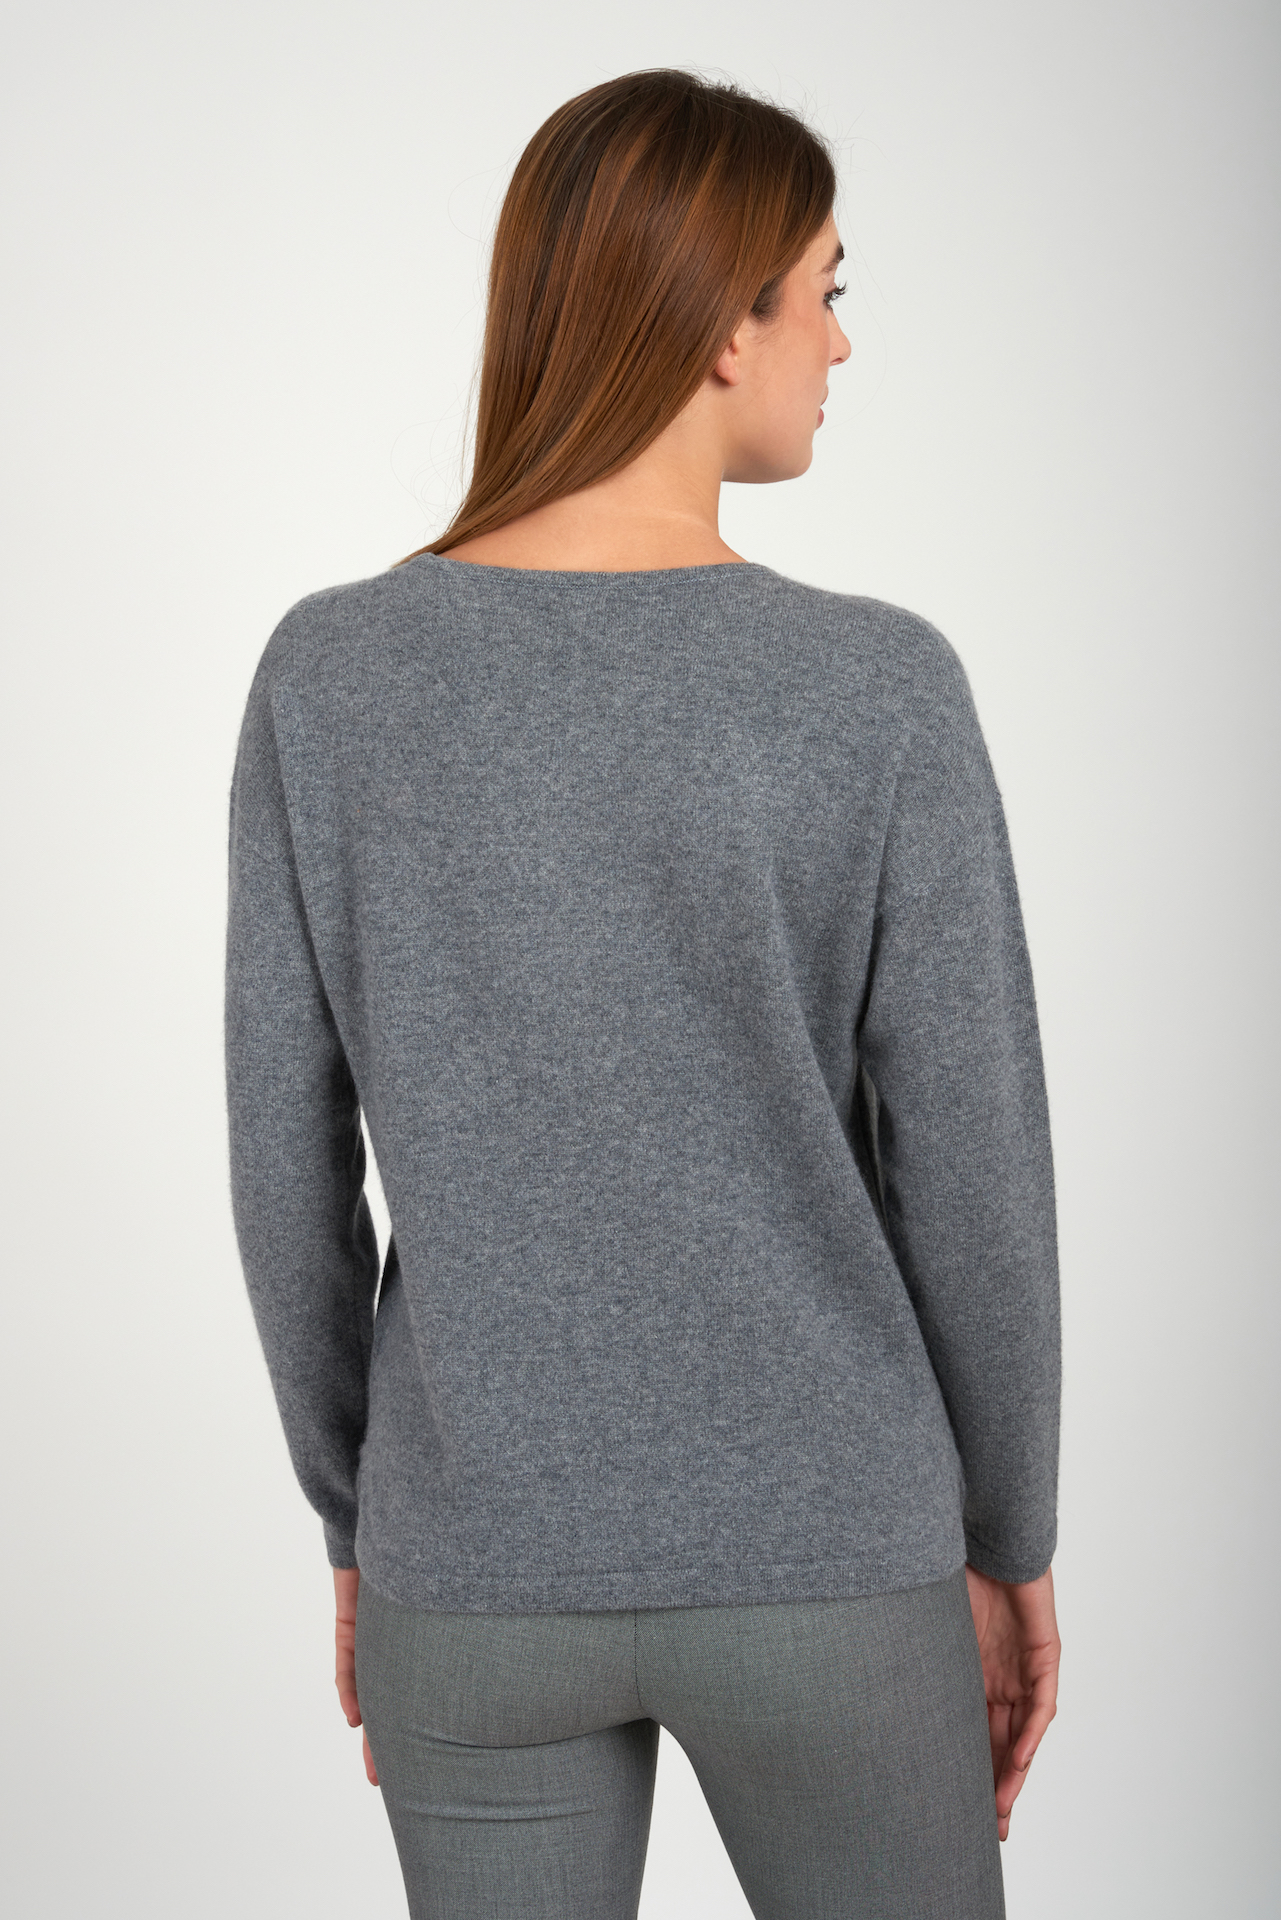 Estheme Cashmere Sweater with Dog motif - Brenda Muir Ladieswear